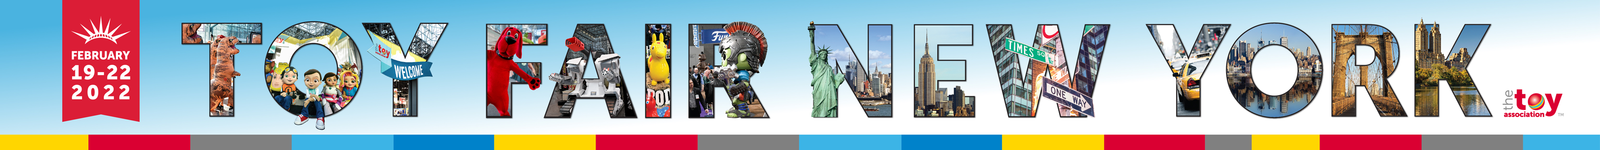 Toy Fair New York 2022 logo